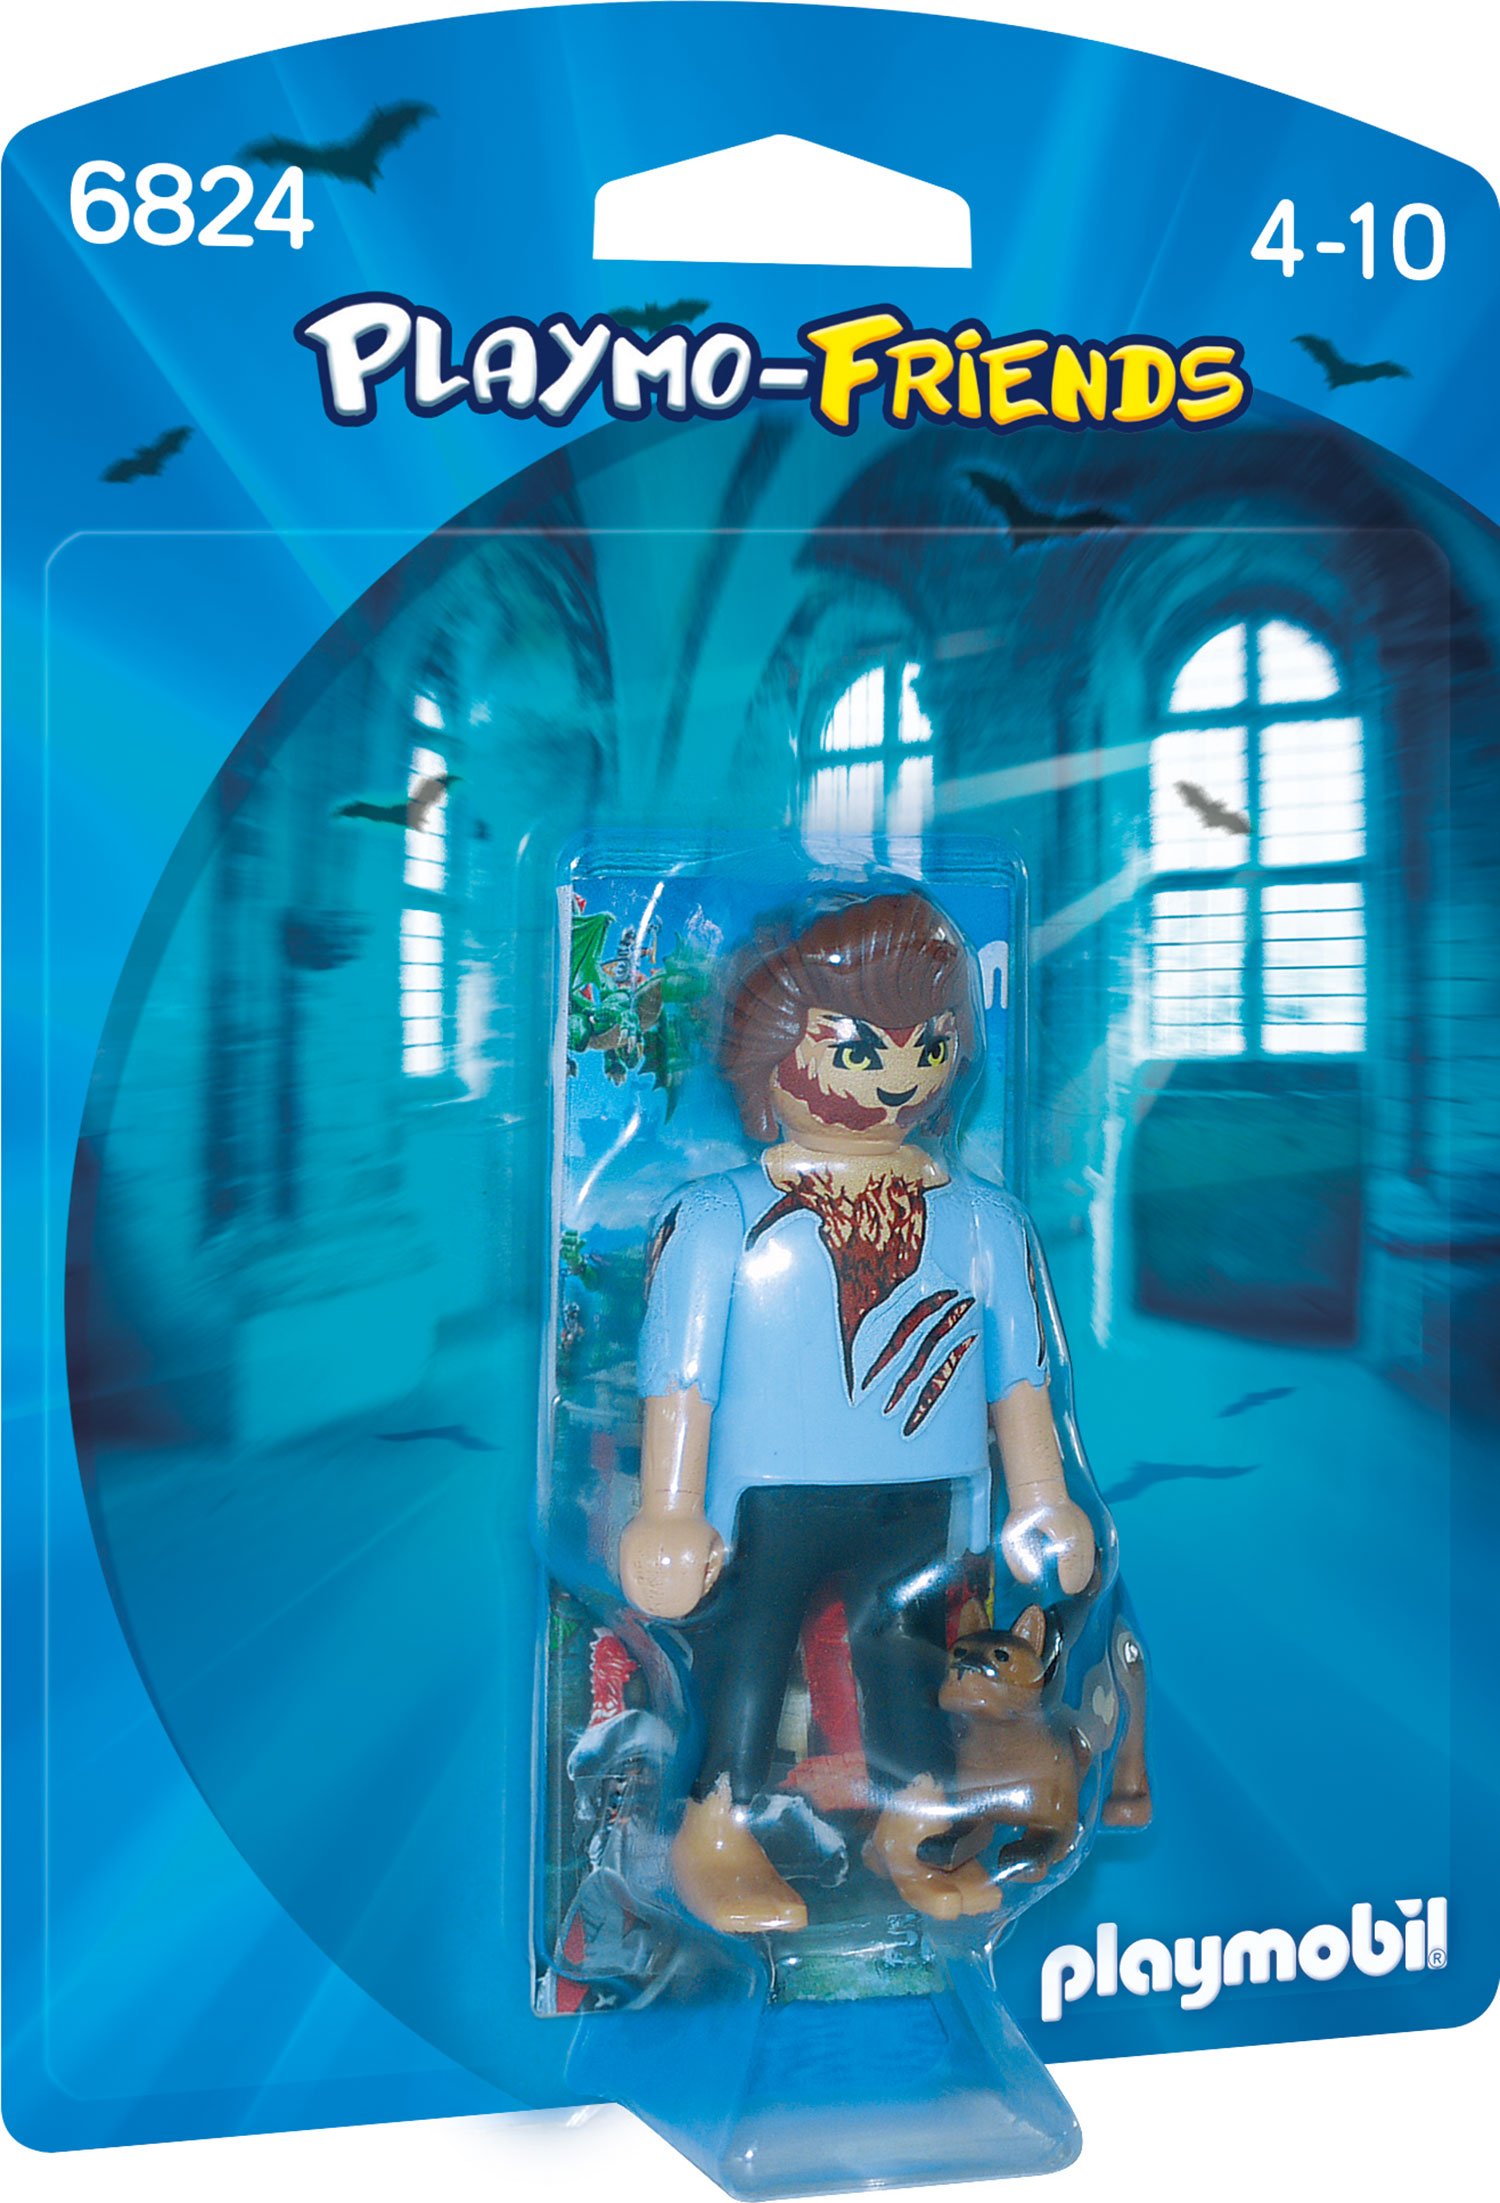 Playmobil Playmo Friends Werewolf Figure